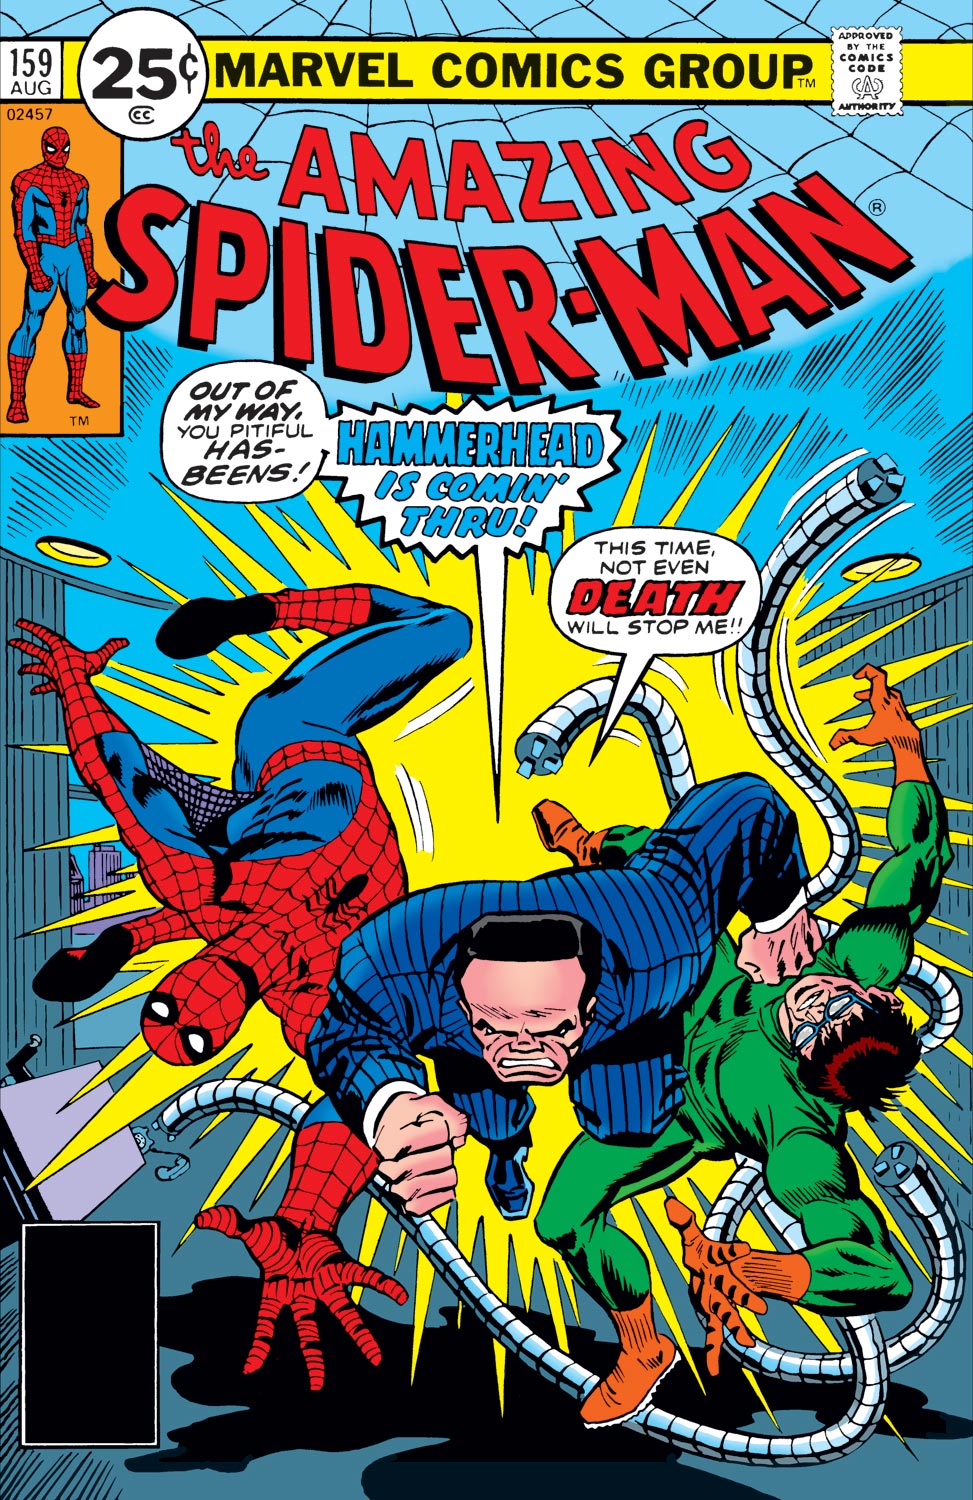 Amazing Spider-Man #159 - Everything Comics